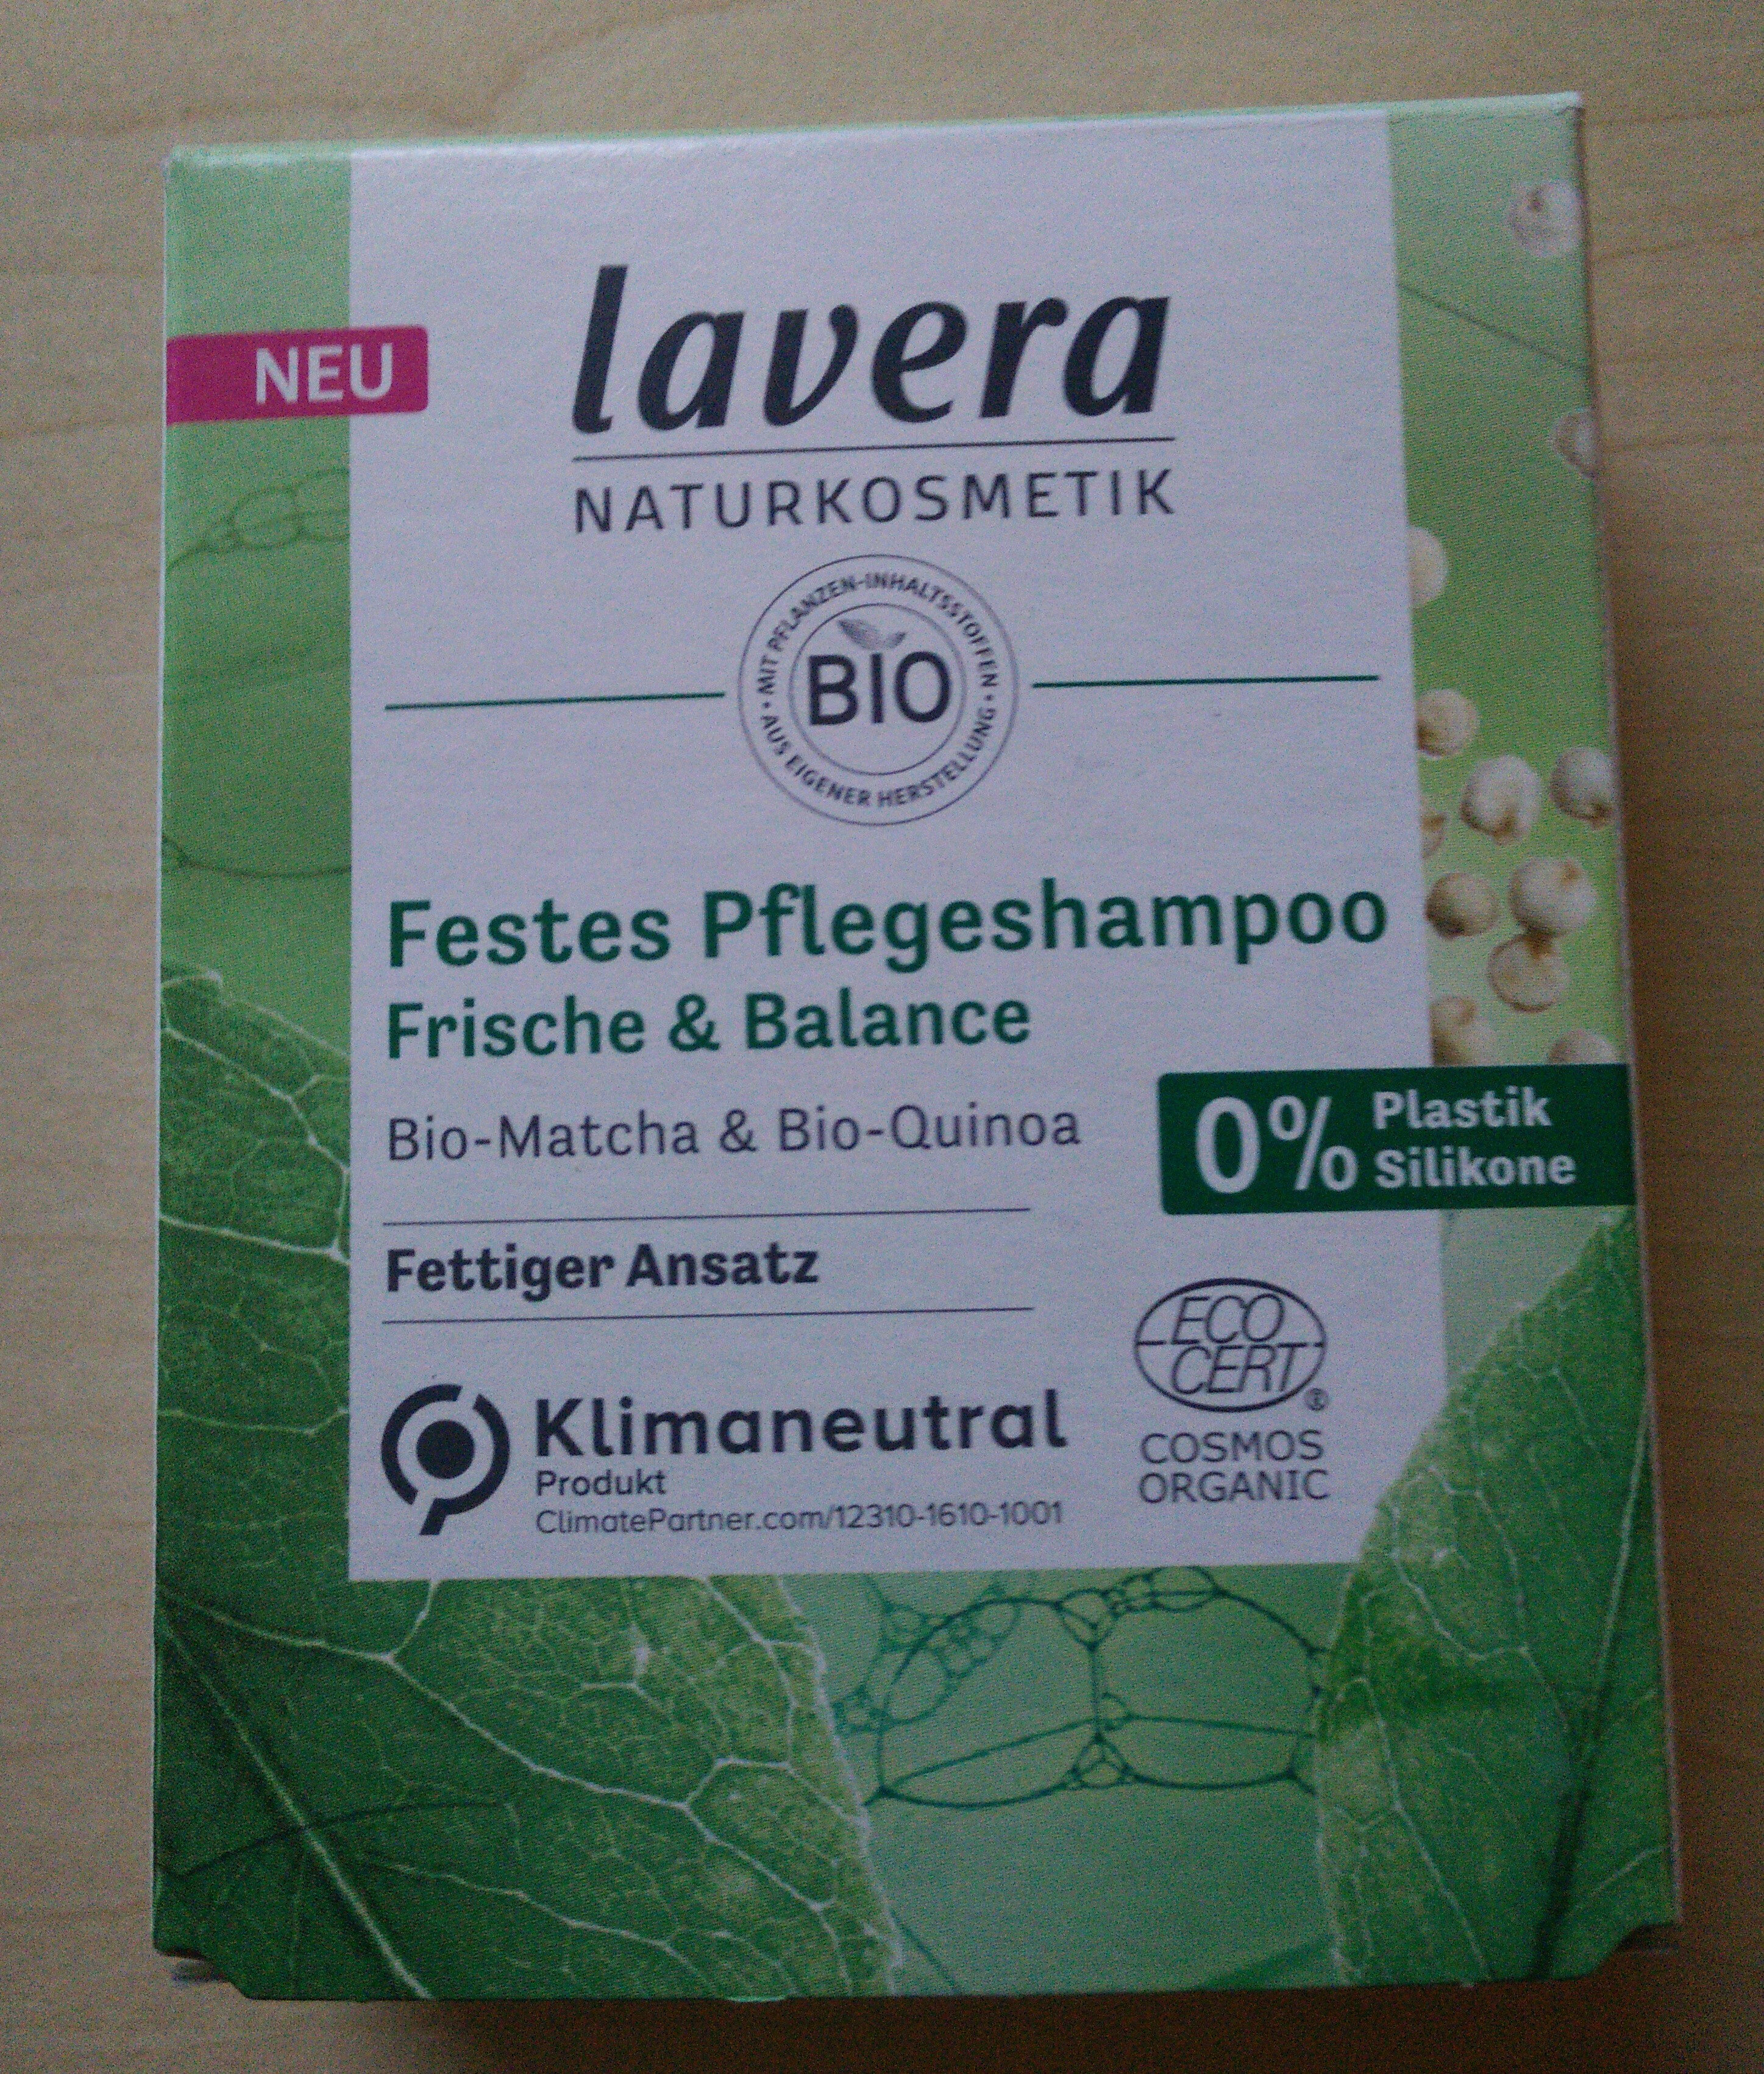 Festes Pflegeshampoo Frische & Balance - Bio-Matcha & Bio-Quinoa - Product - de